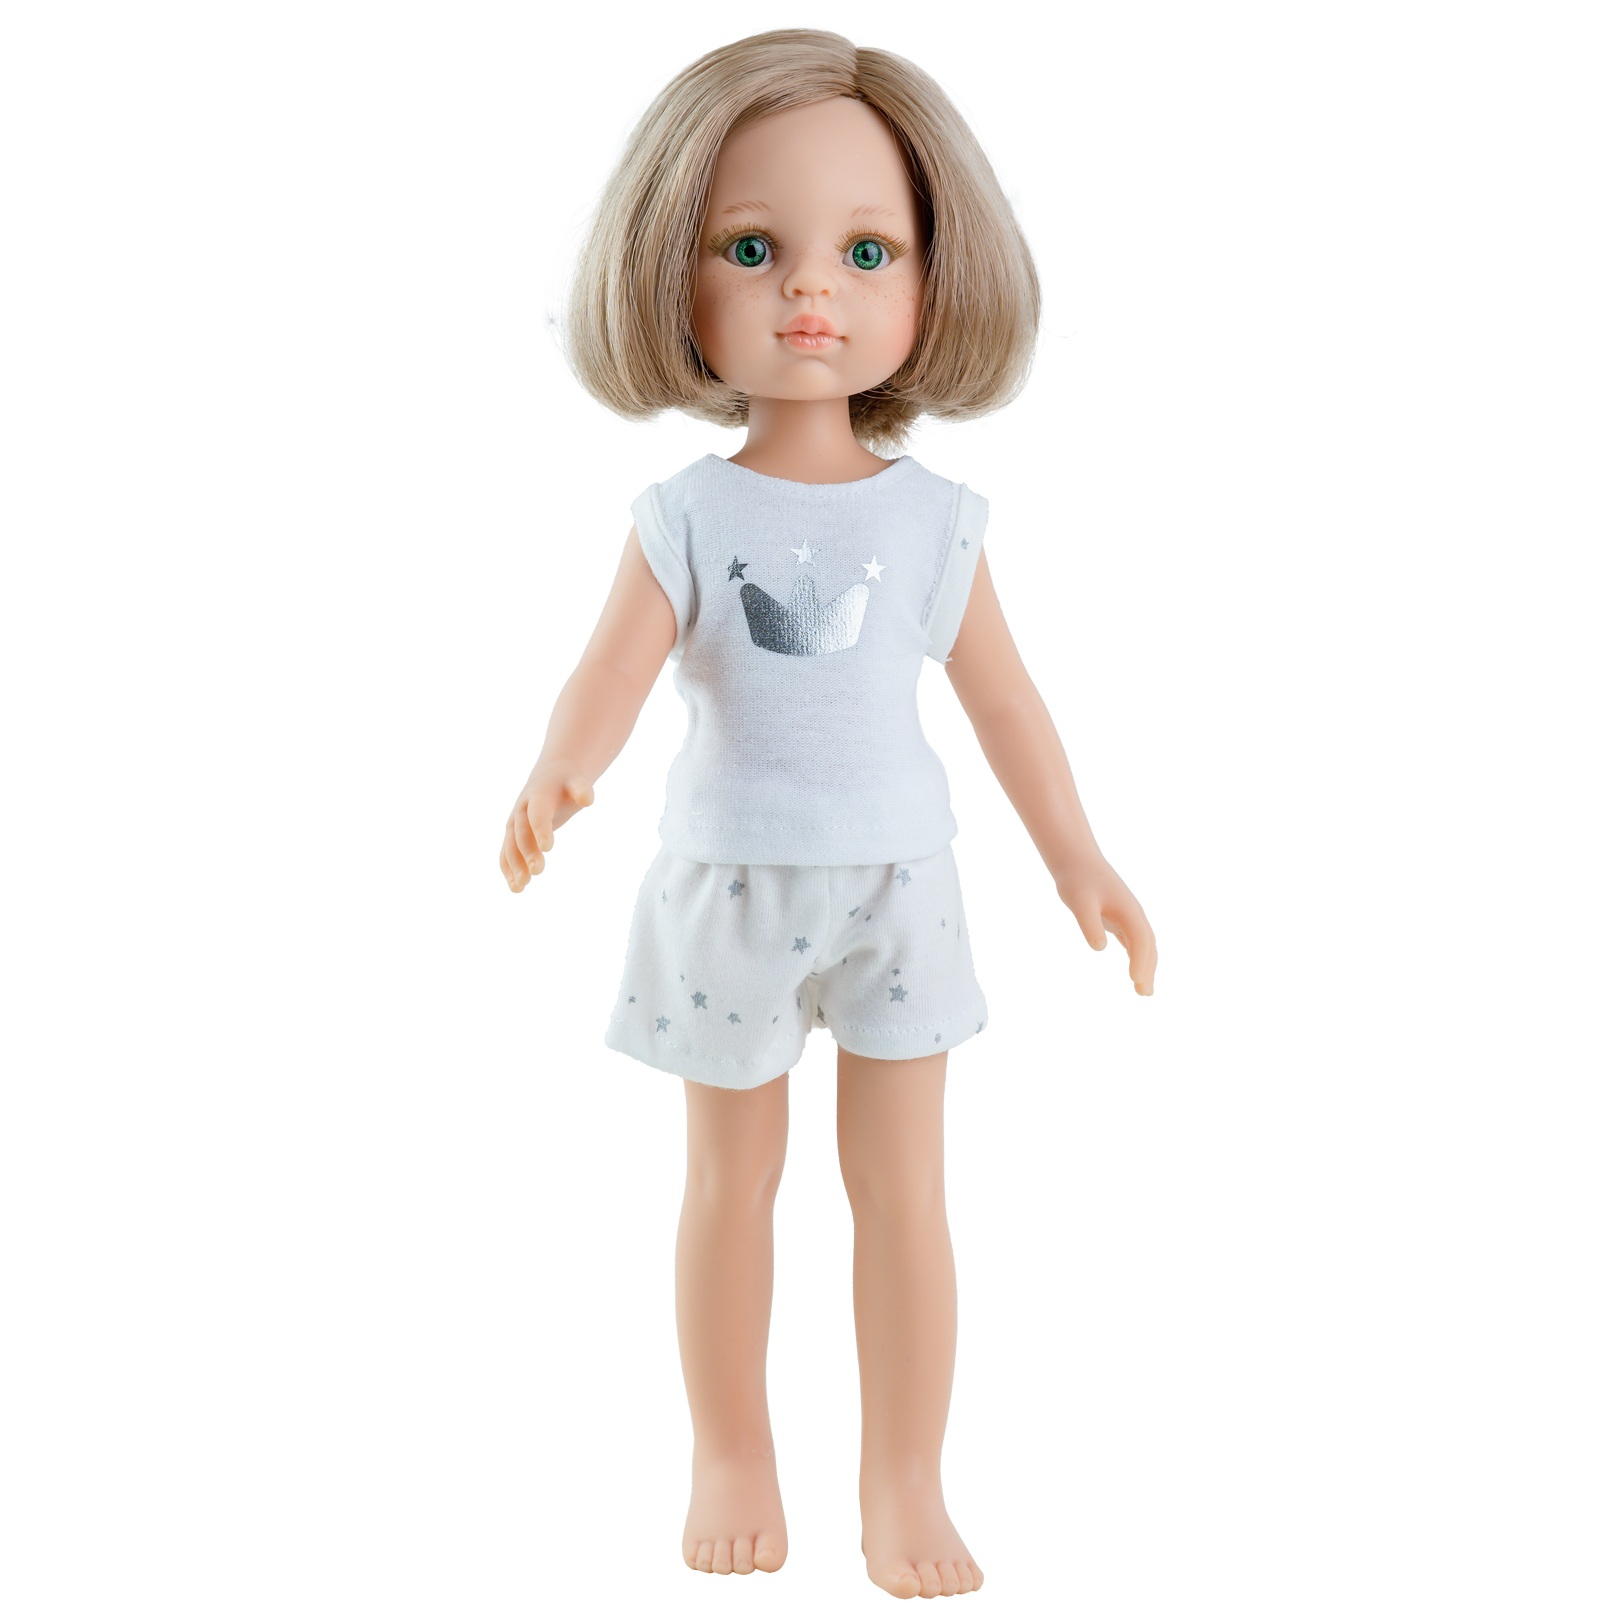 Одежда для кукол 32 см. Кукла Паола Рейна. Кукла Paola Reina 32см. Паола Рейна 32 см.